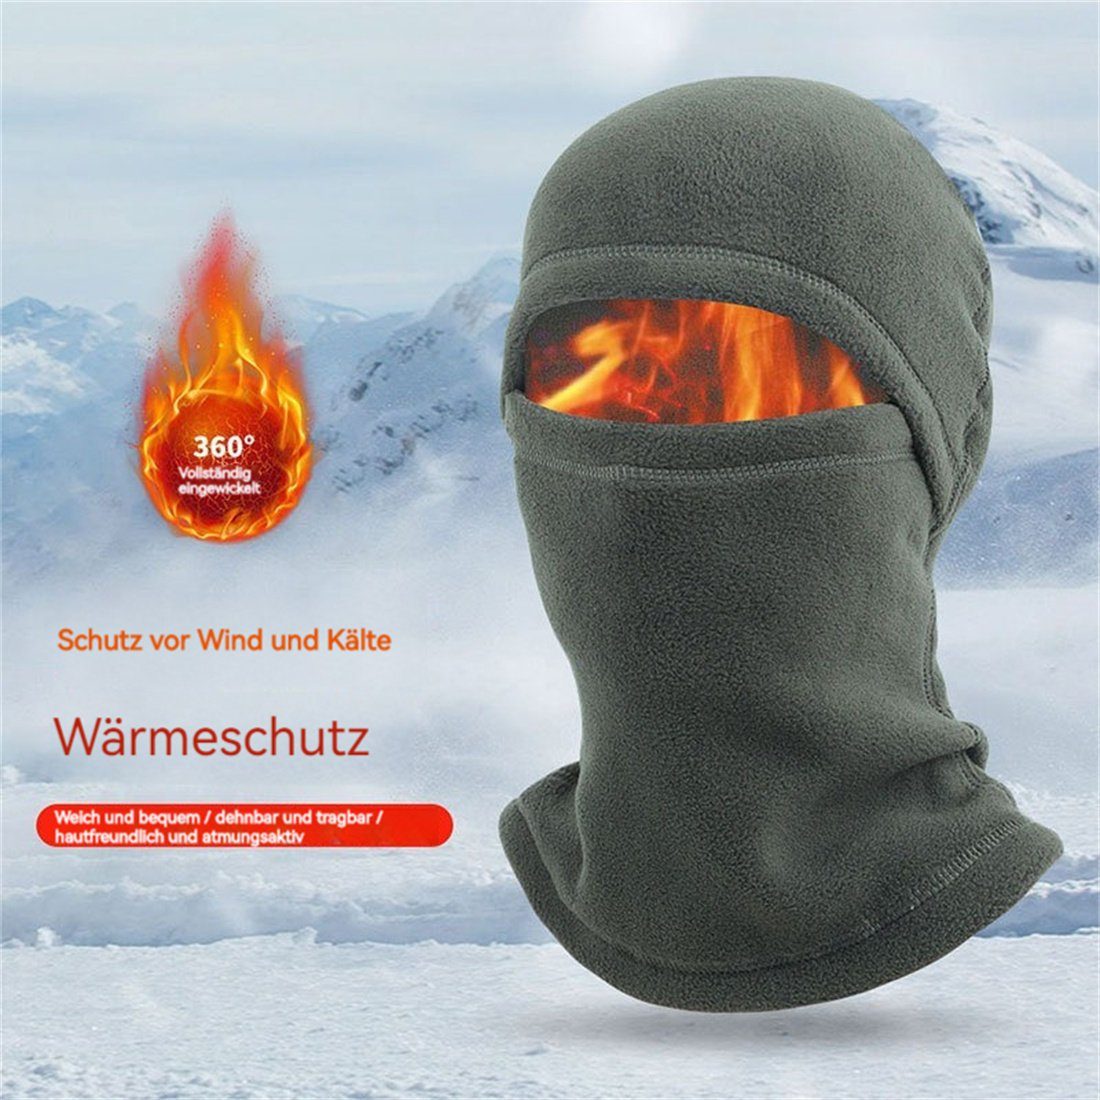 Sturmhaube Kopfbedeckung Warme Maske,Multifunktionale Reiten Ski grün DÖRÖY Winter Coldproof